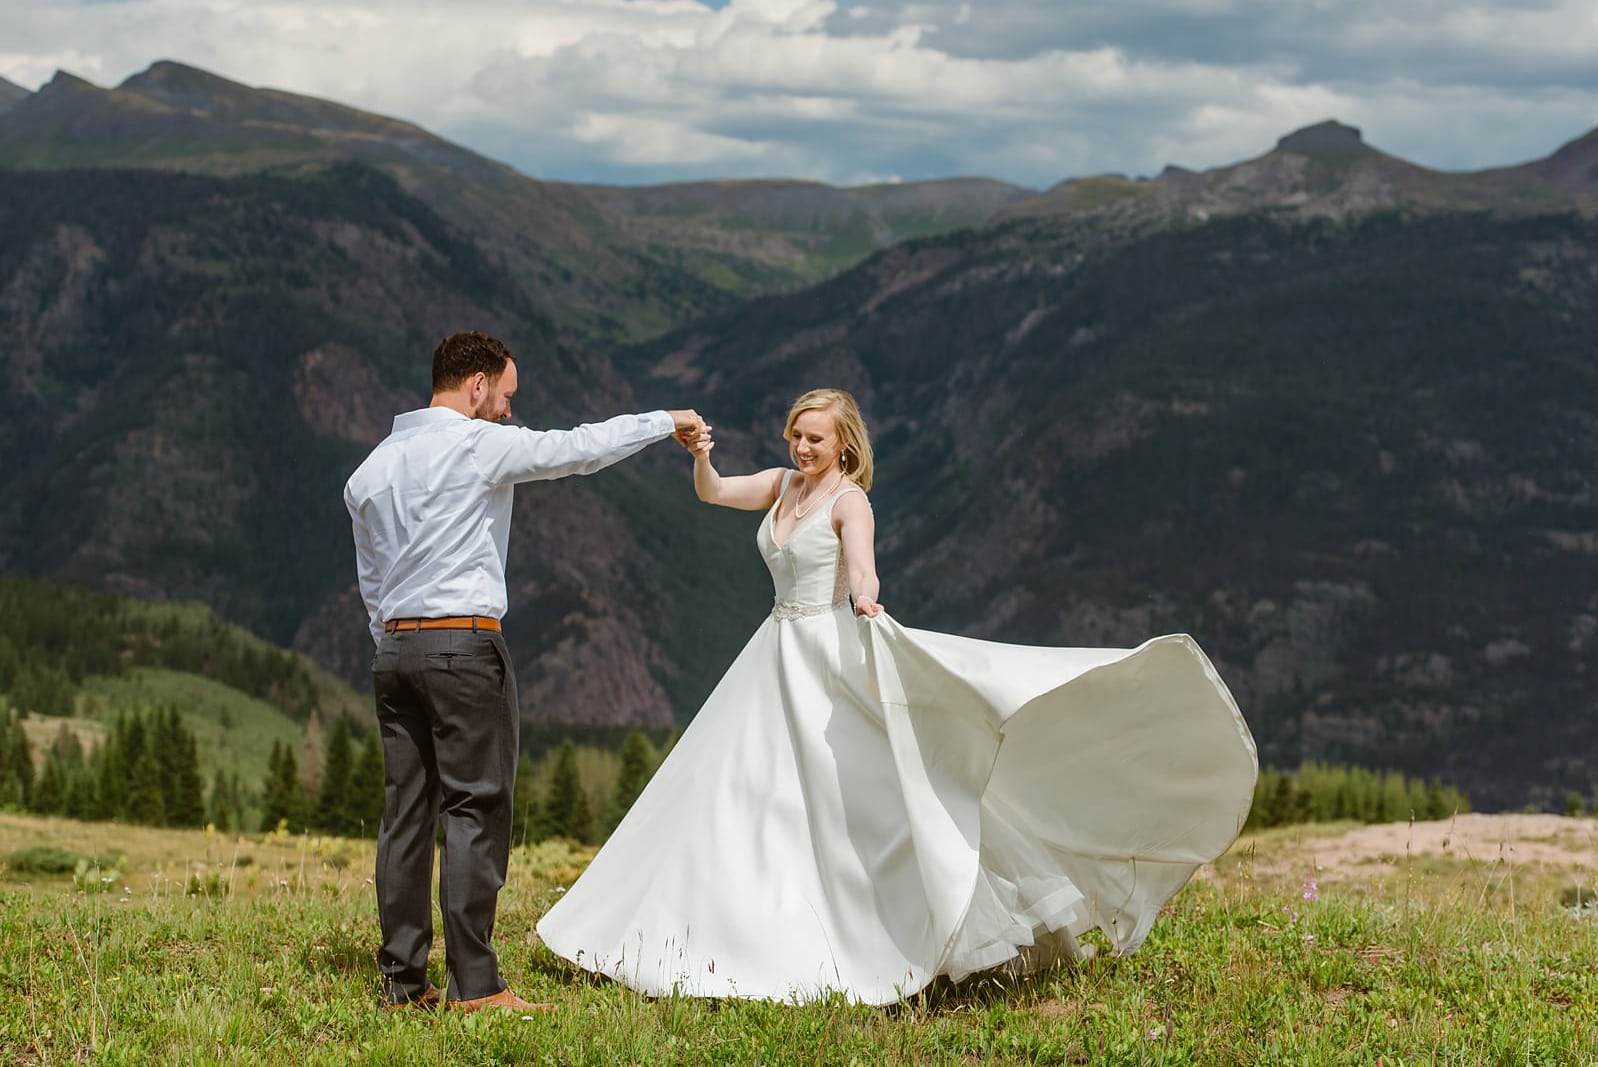 Elopement couple dances in Durango mountains